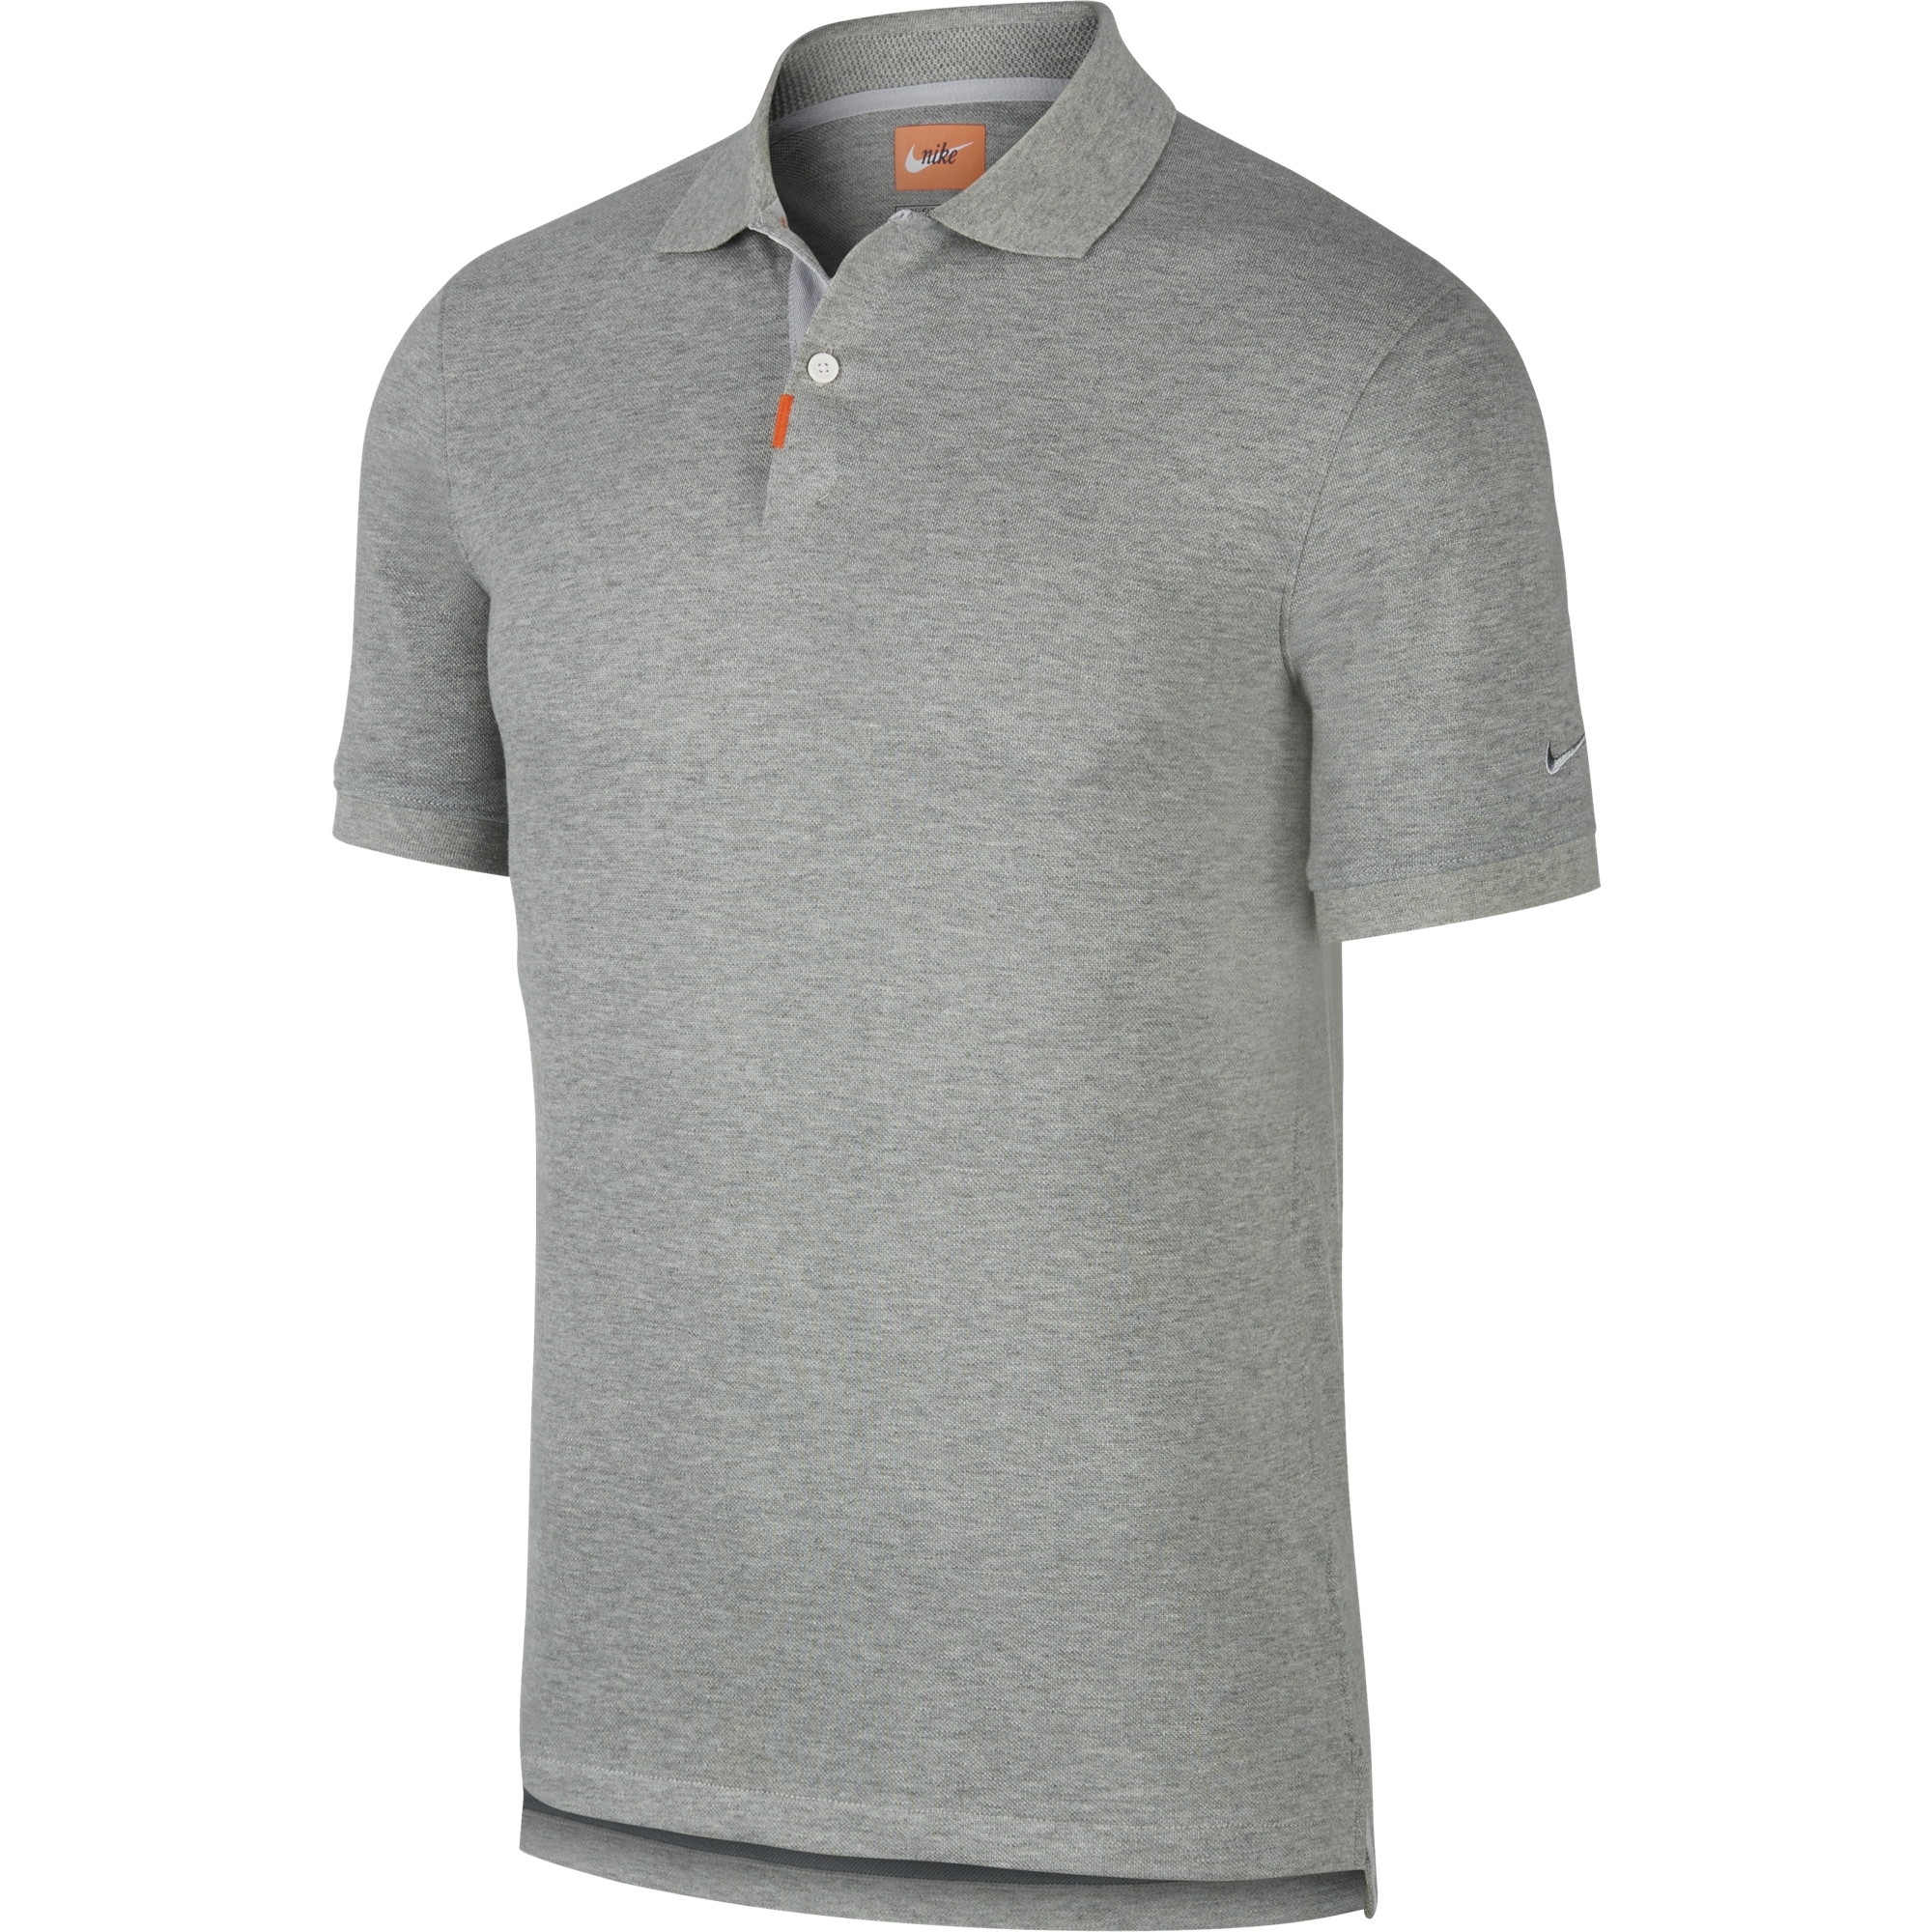 Nike Mens Dri Fit Slim Fit Breathable Golf Polo Shirt L- Chest 41-44